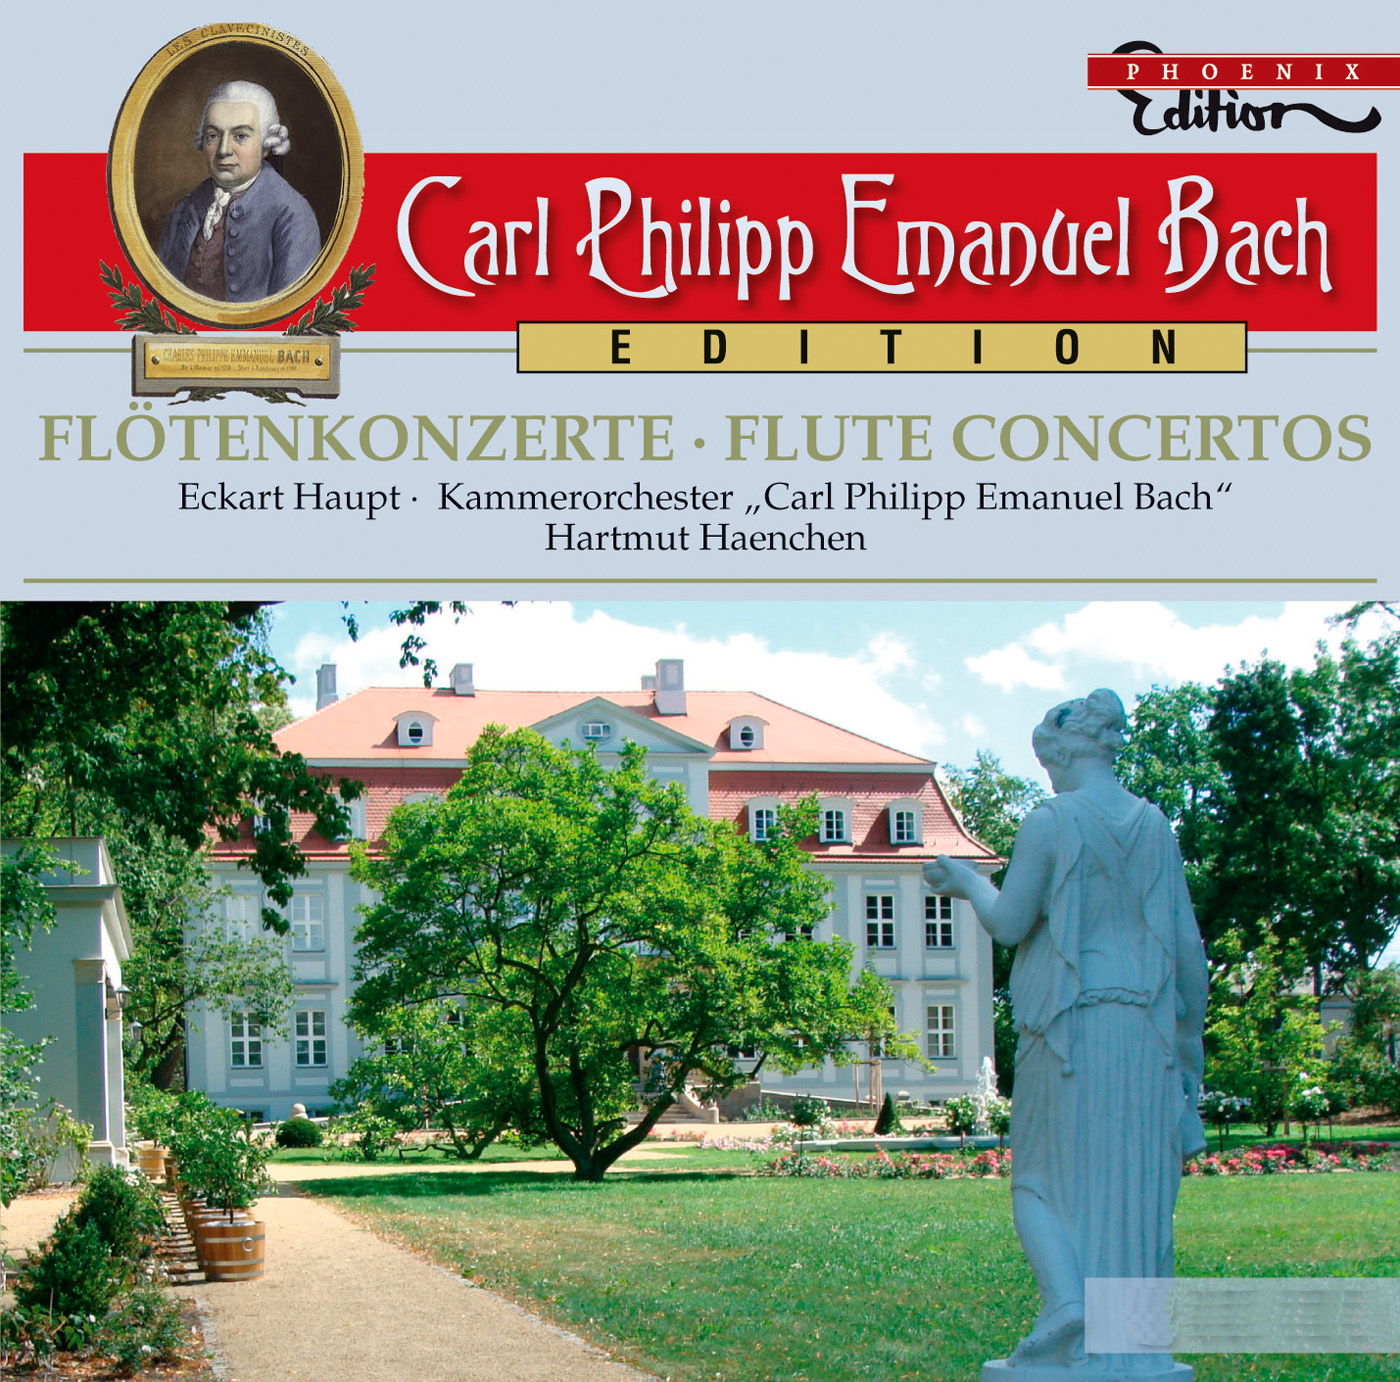 Carl Philipp Emanuel Bach. Kammerorchester Carl Philipp Emanuel Bach - Horn Concertos. Carl Philipp Emanuel Bach - c.p.e. Bach Edition (30 CDS Box Set) (2014). Bach Edition. Flute concertos